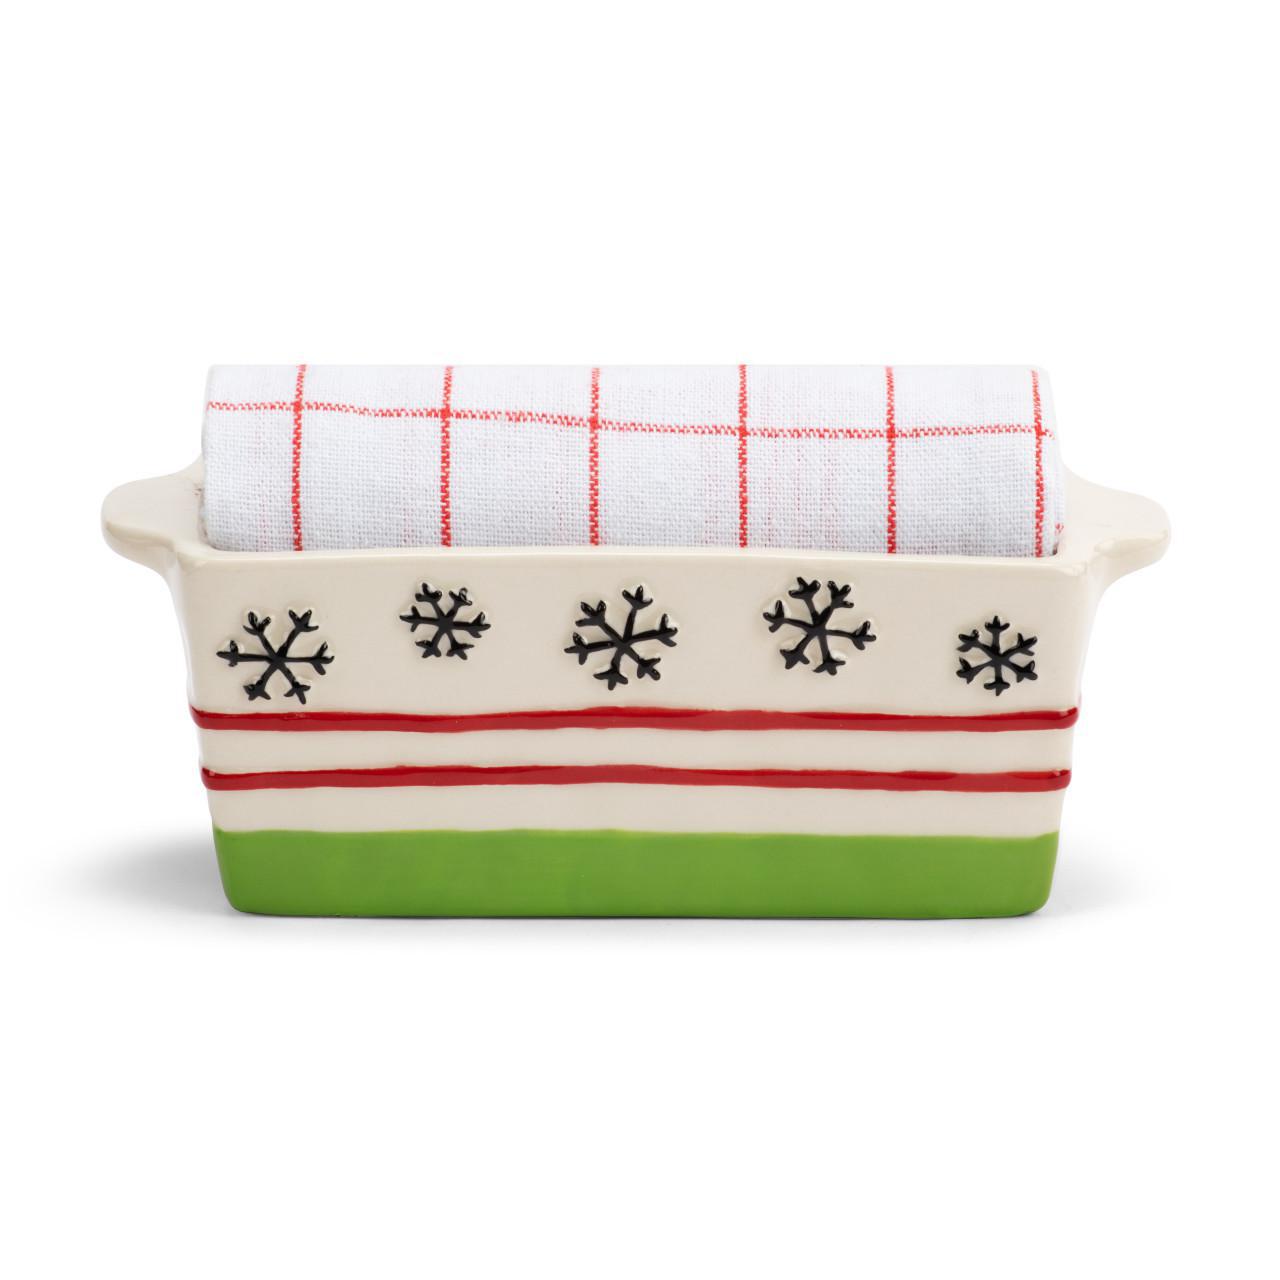 Mini Loaf Pan with Towel Set - Snowflakes